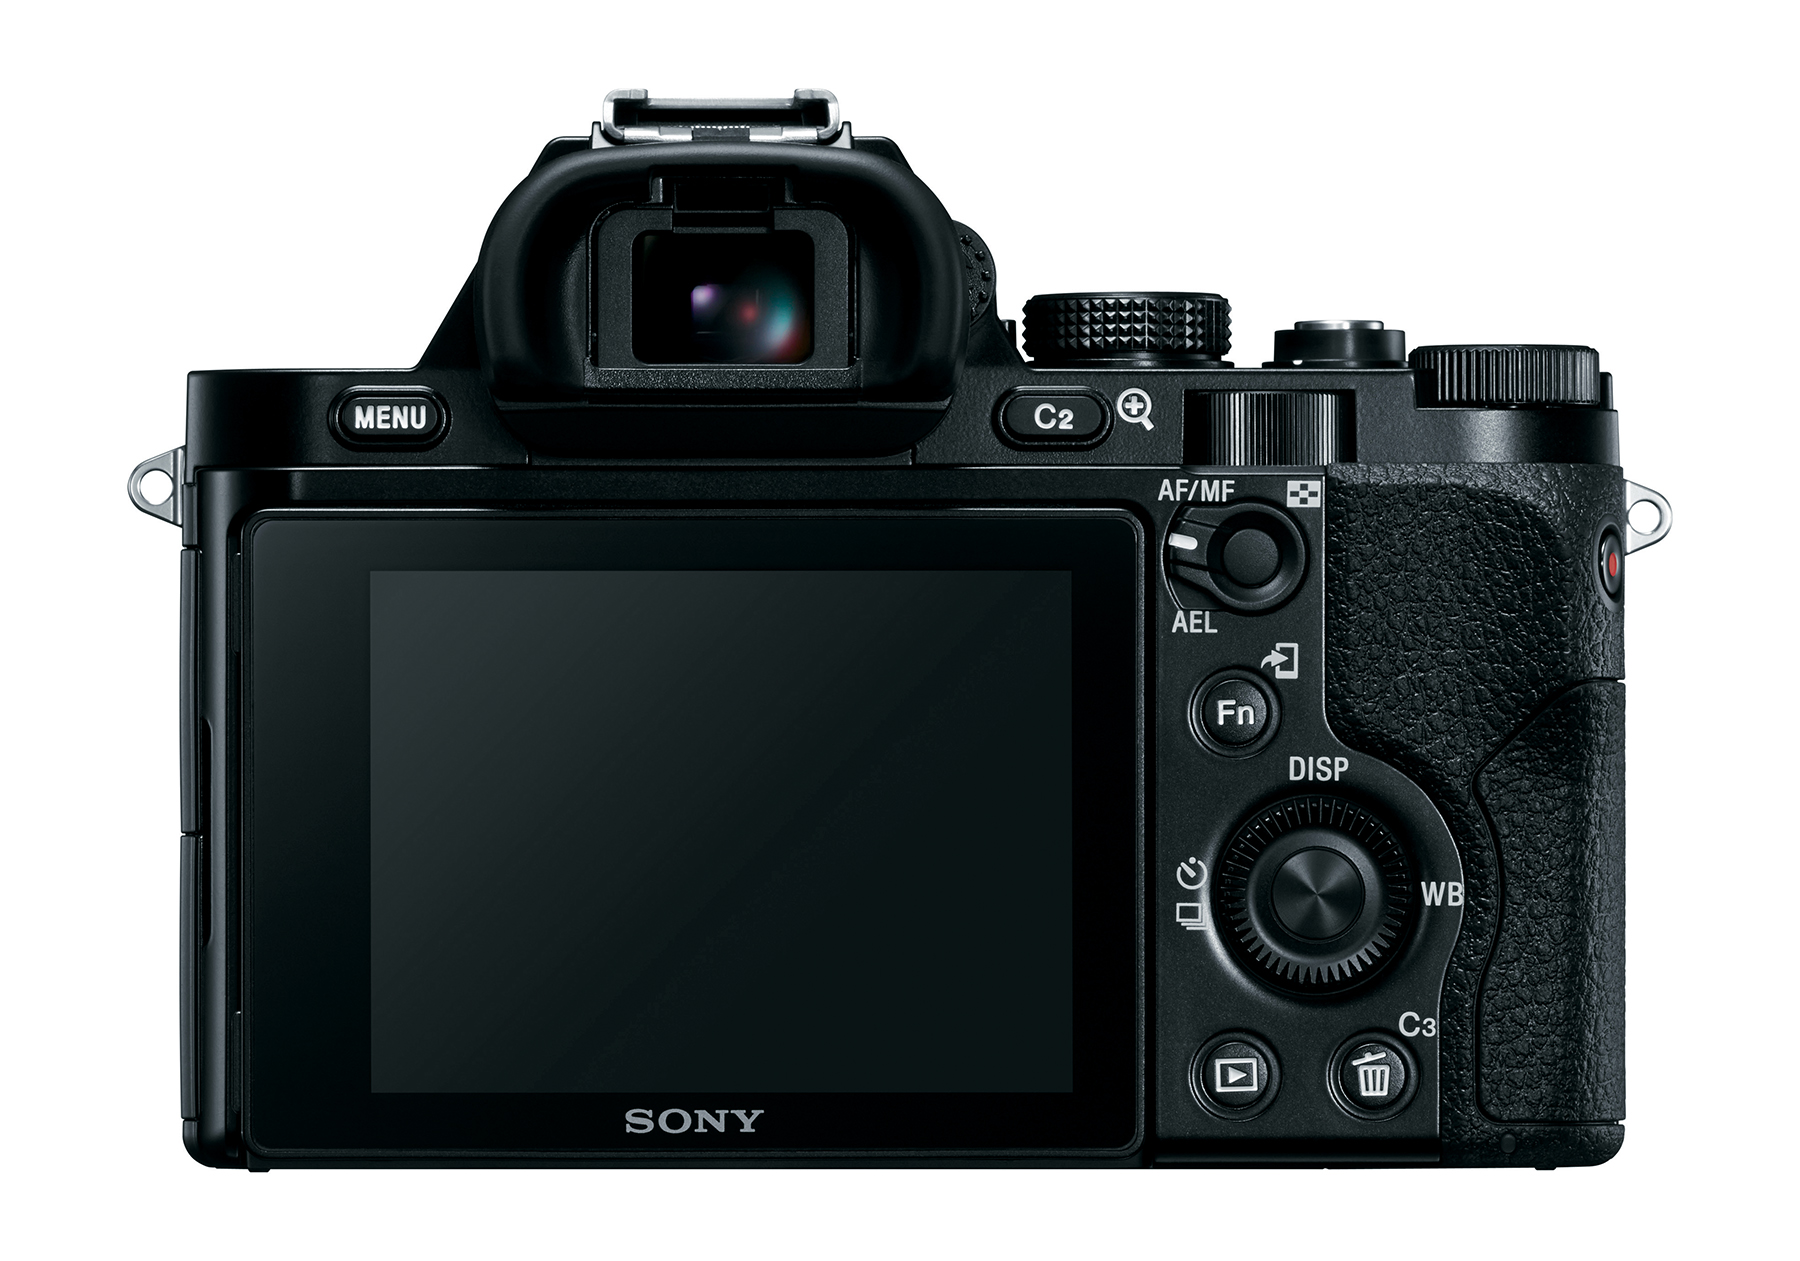 Sony Alpha a7 Full Frame Mirrorless Camera - Black - image 2 of 5